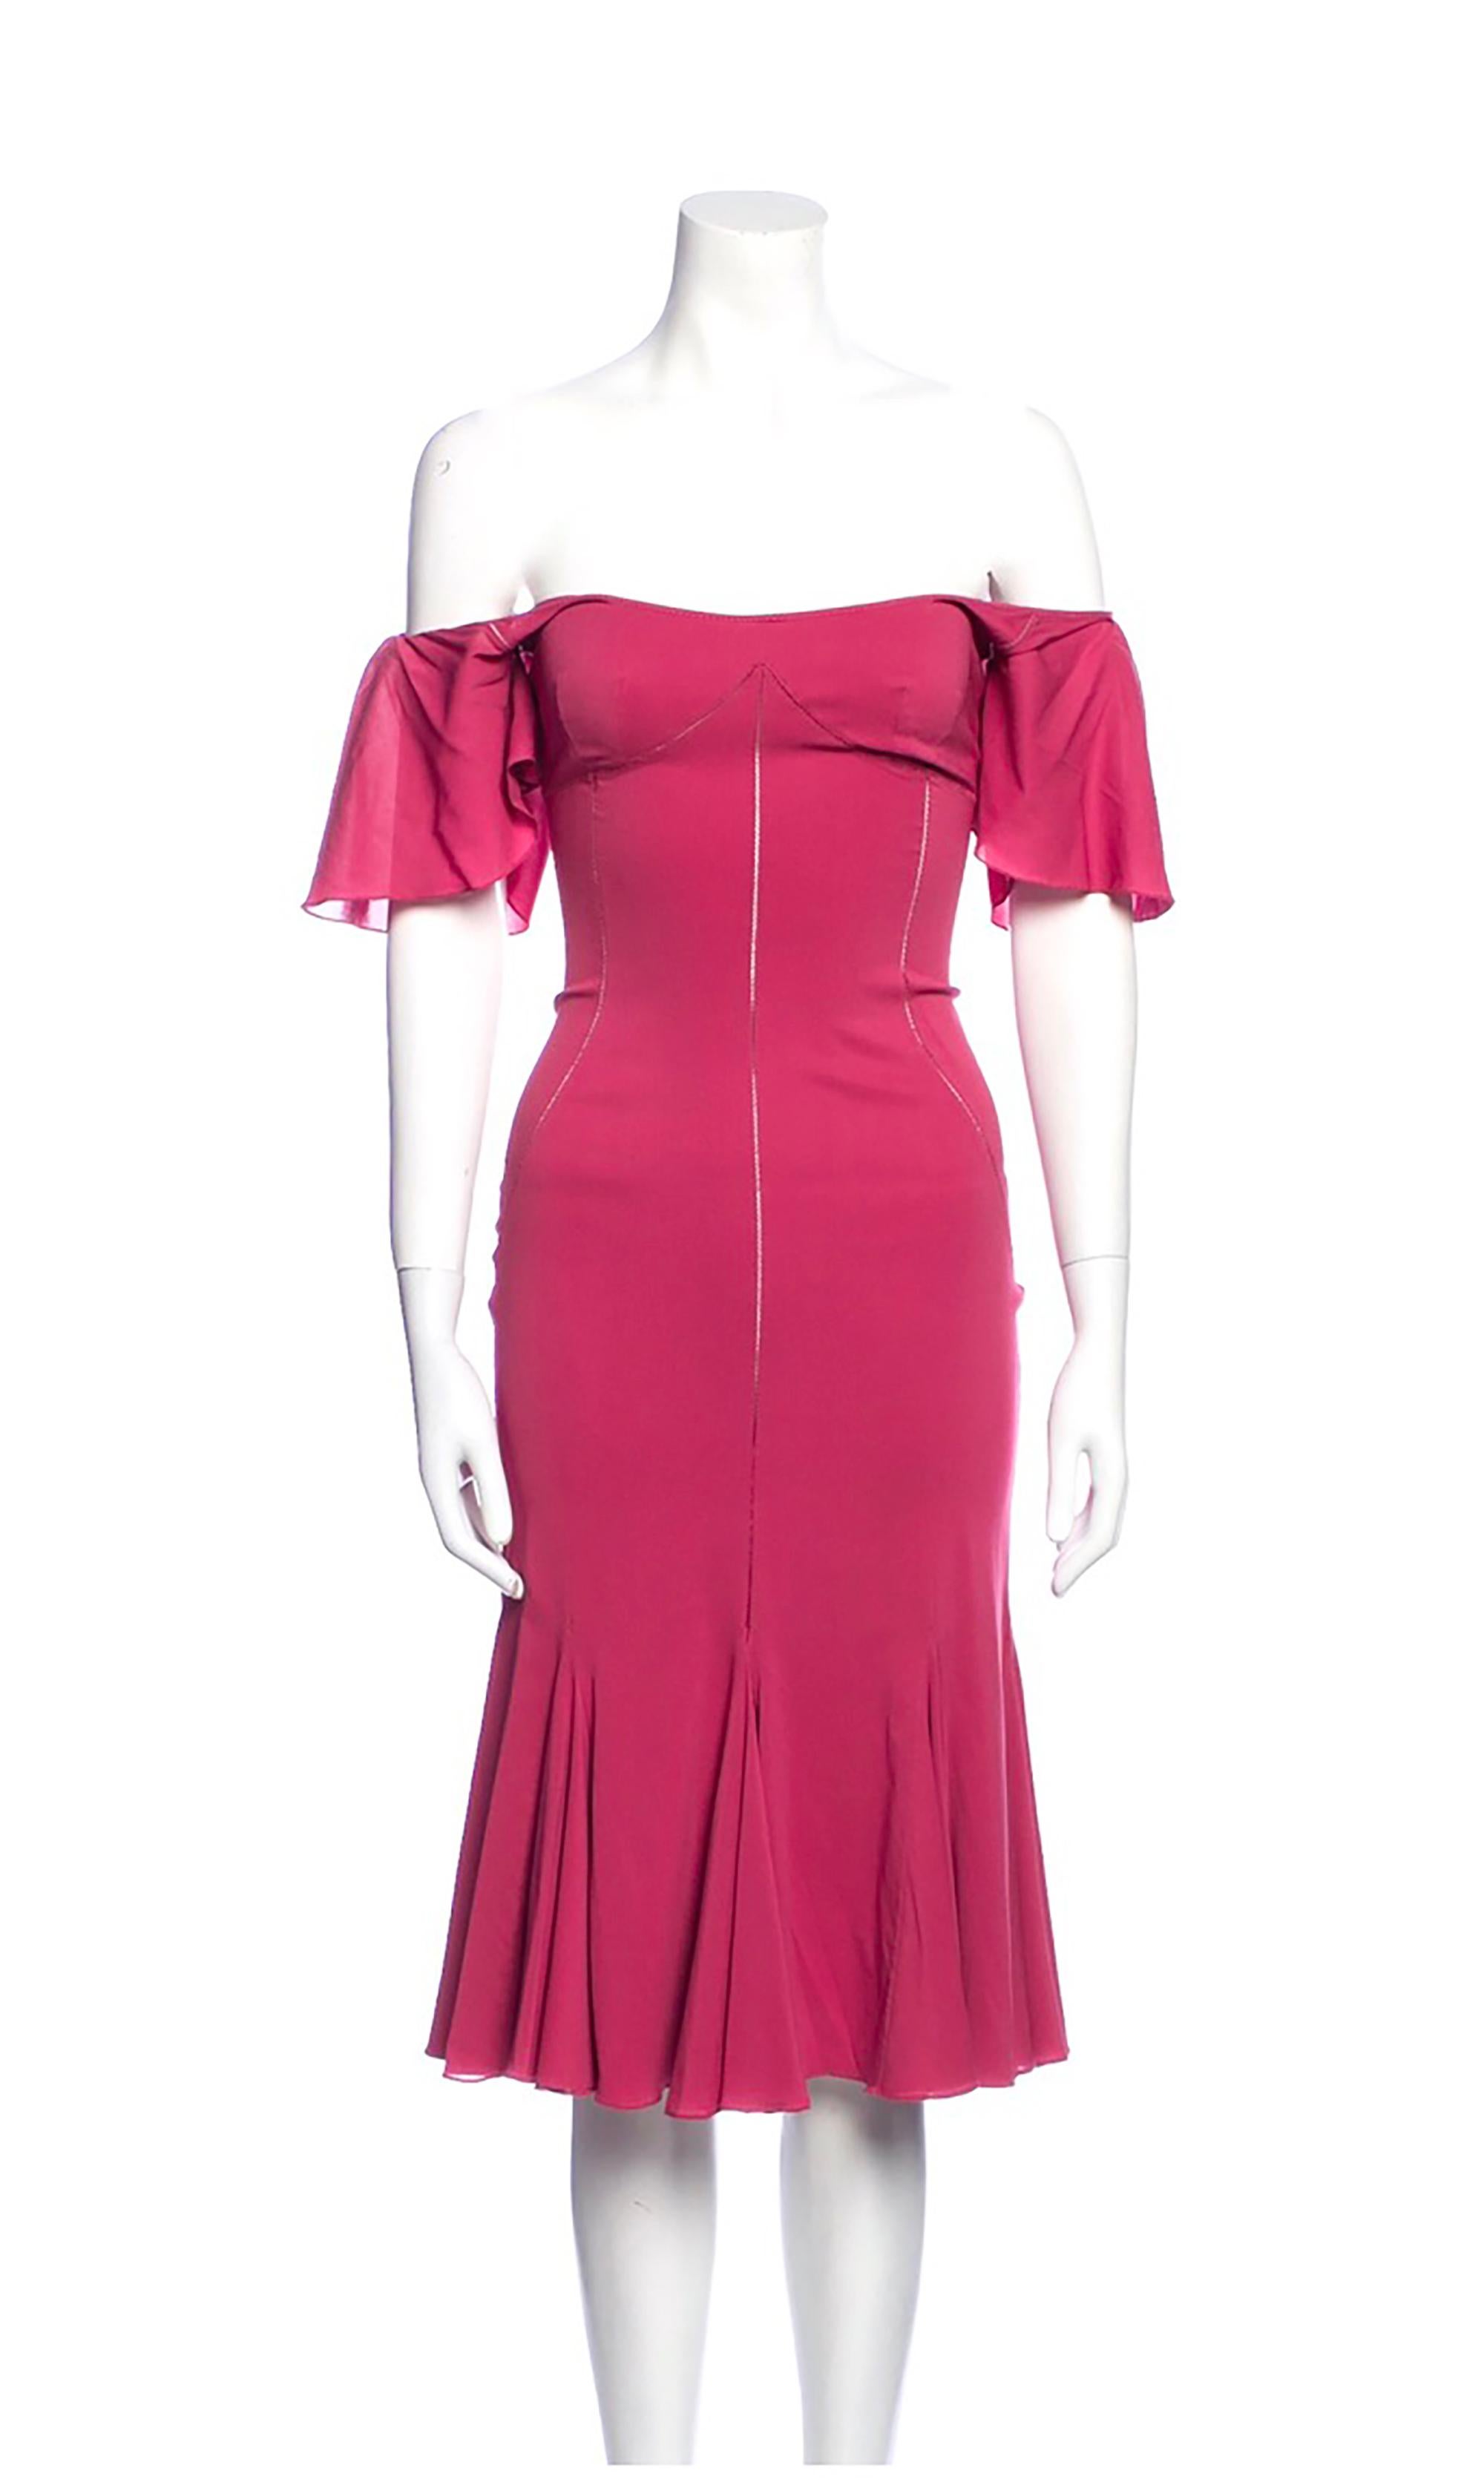 2000s Dolce & Gabbana Pink Off Shoulder Fluted Dress 
ruffle hem
short sleeve with off-the shoulder
Condition: Excellent
29.25